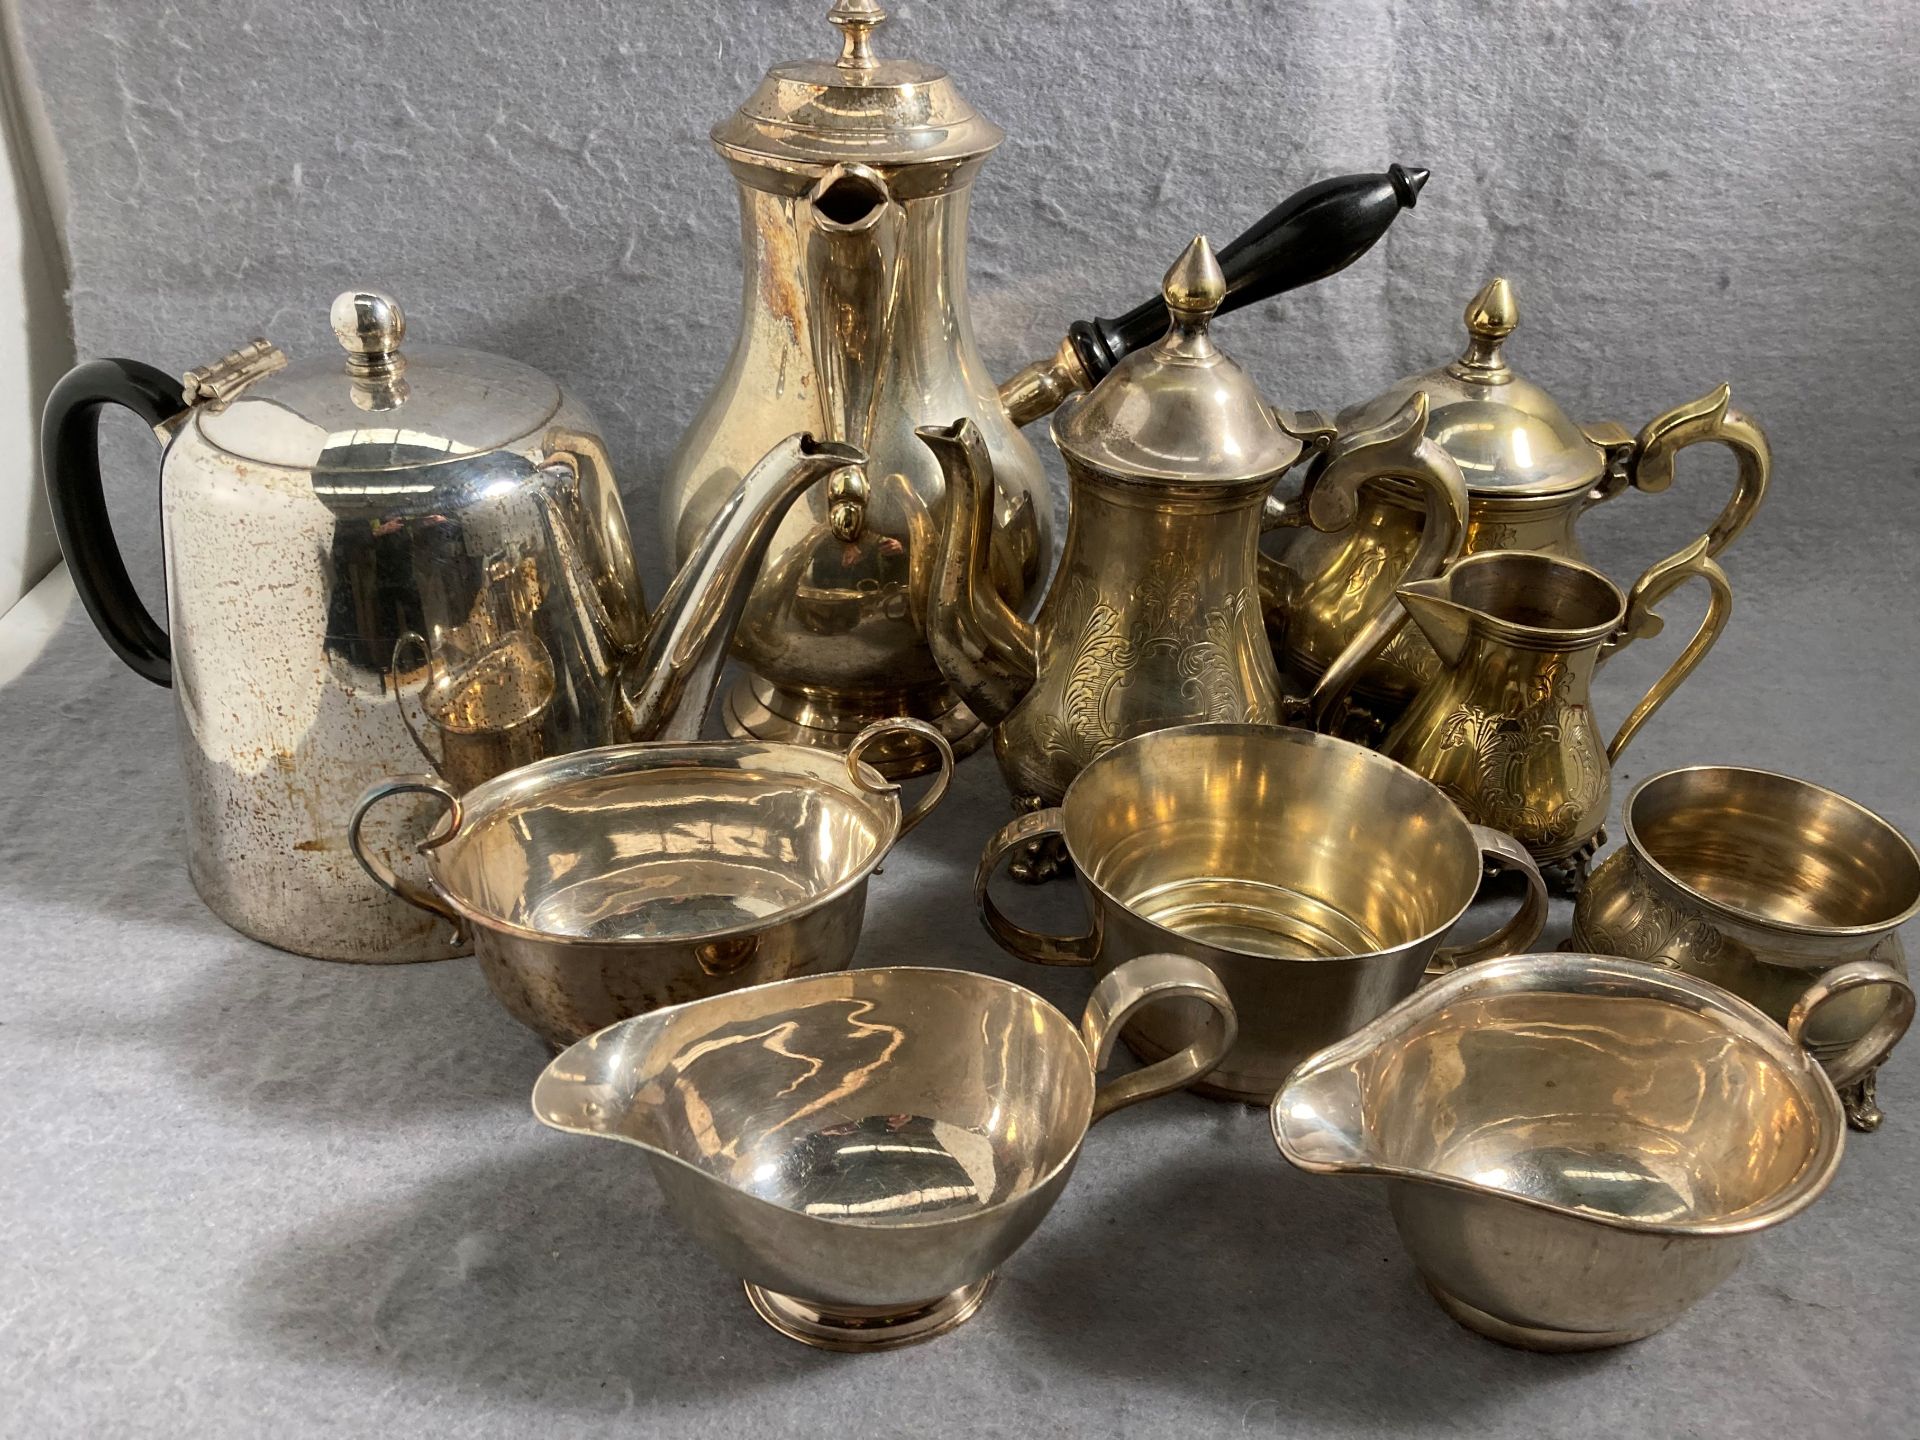 A silver plated four piece tea service, hot chocolate jug, teapot, - Image 2 of 2